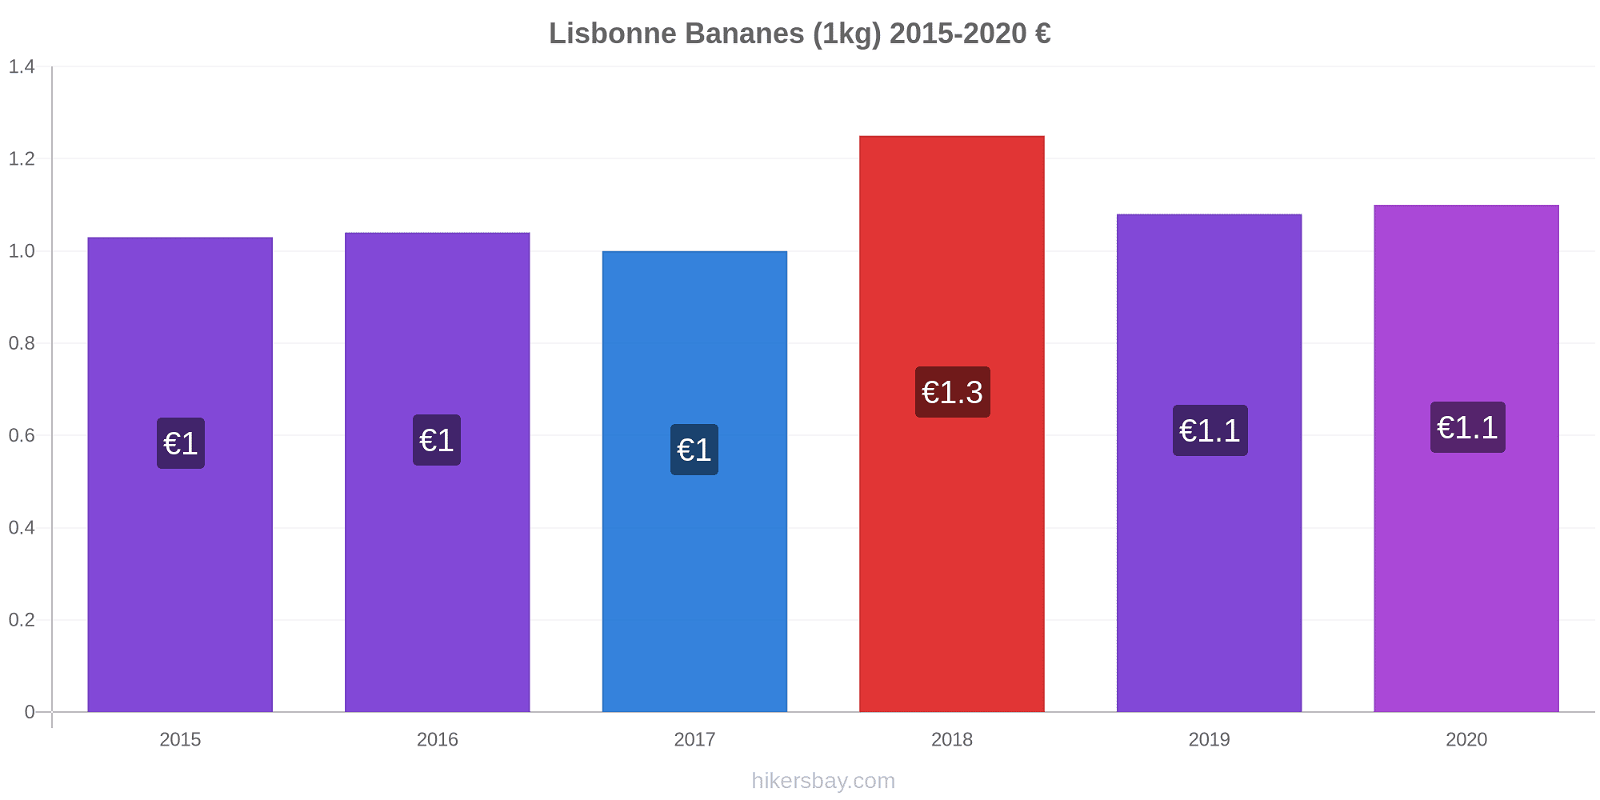 Lisbonne changements de prix Bananes (1kg) hikersbay.com